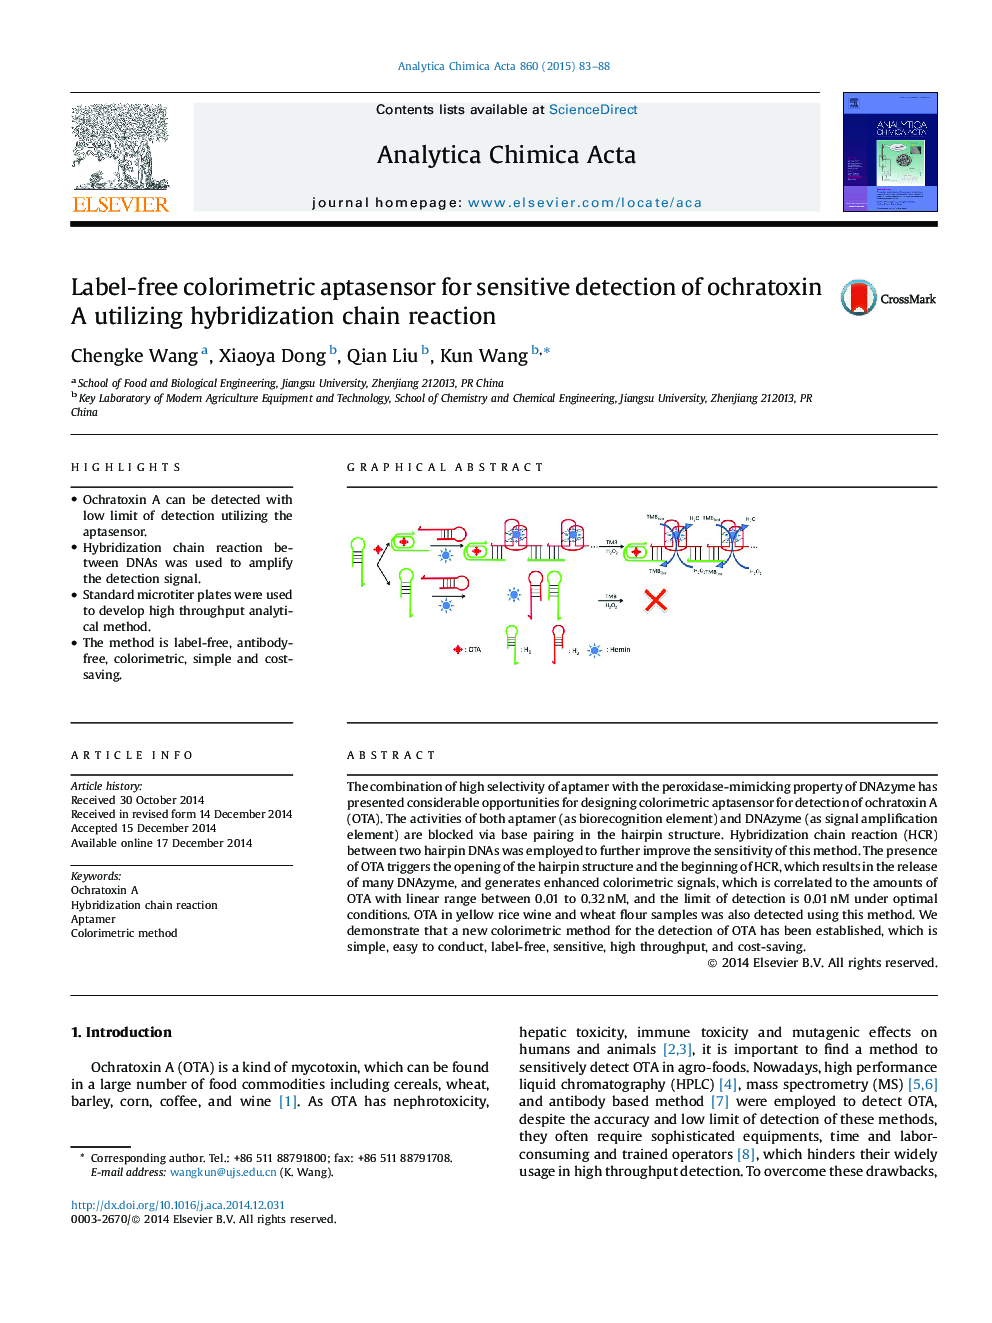 Label-free colorimetric aptasensor for sensitive detection of ochratoxin A utilizing hybridization chain reaction